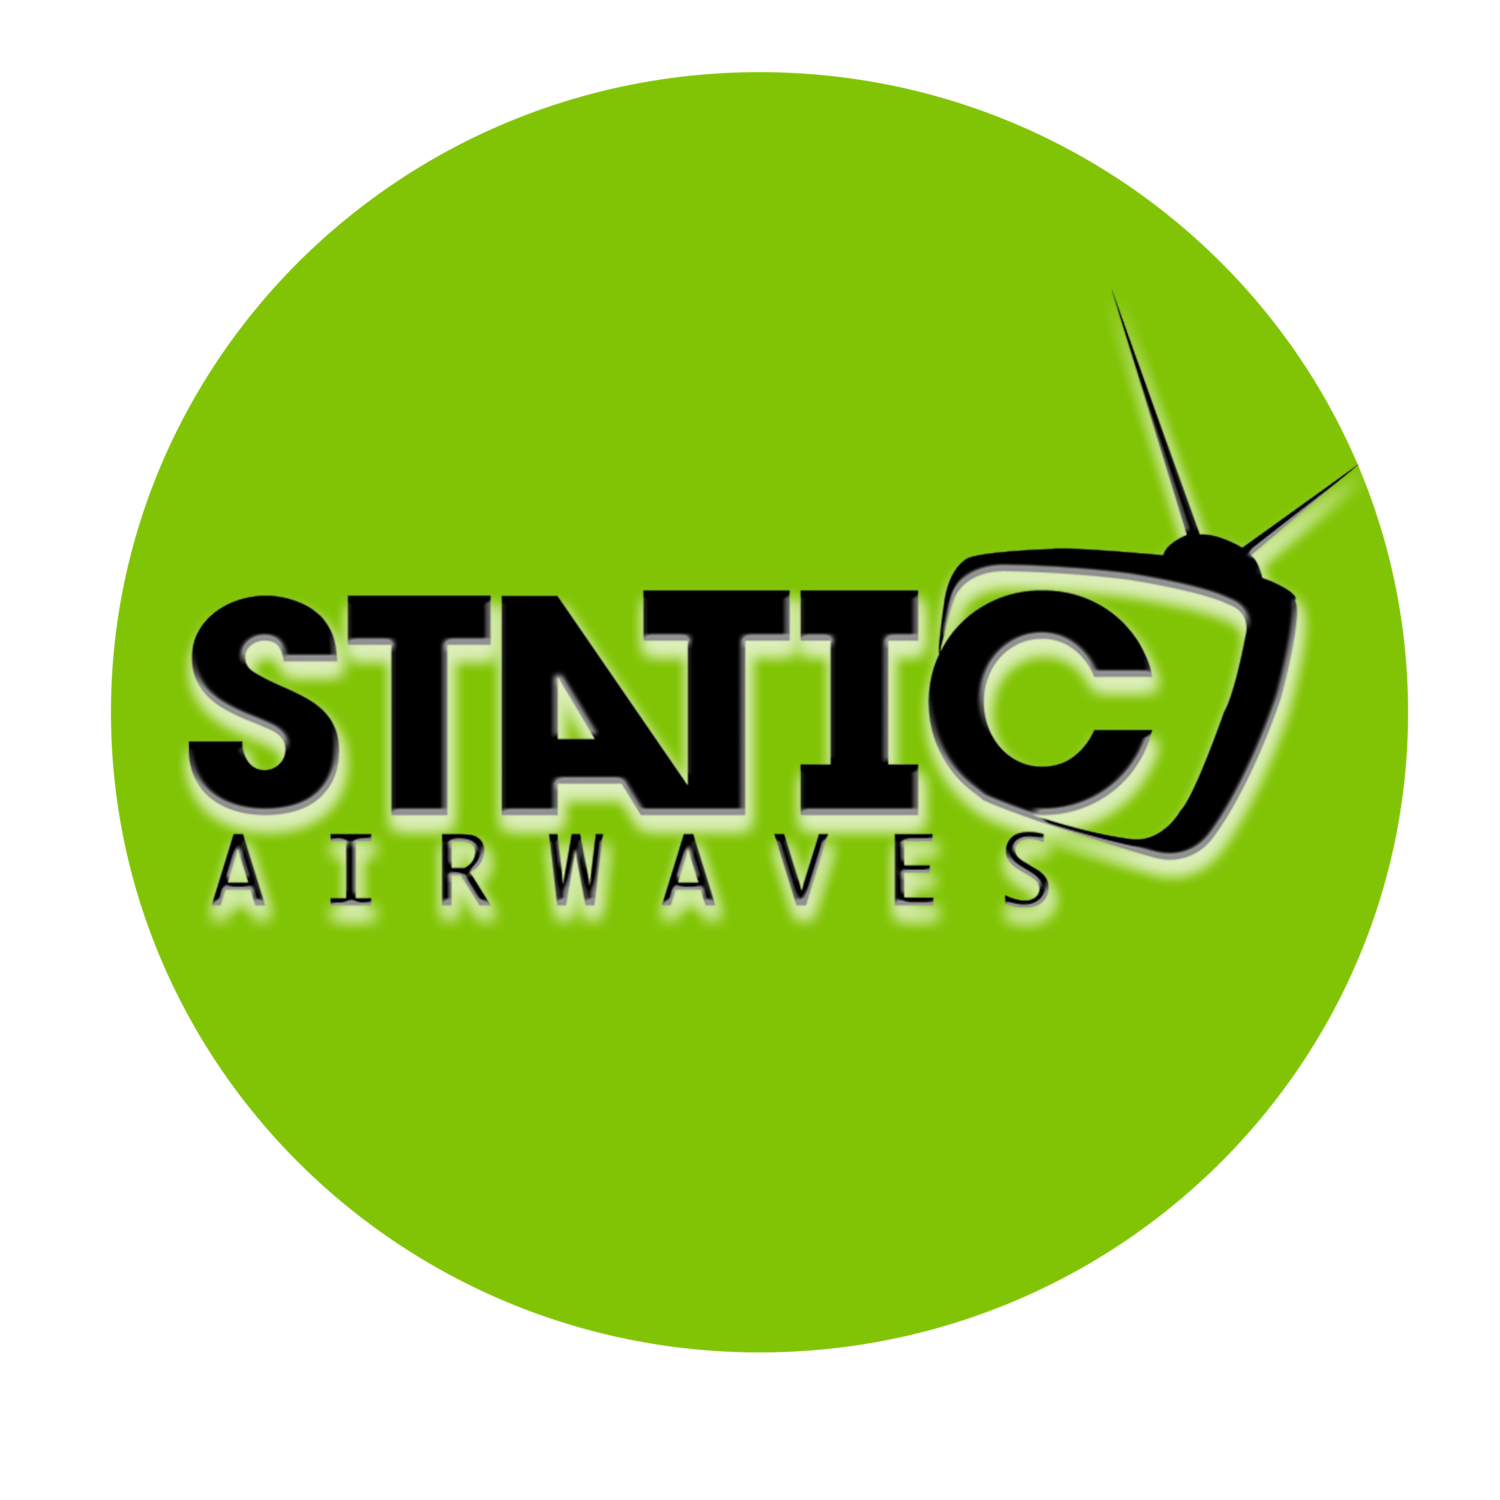 Static Airwaves Ltd